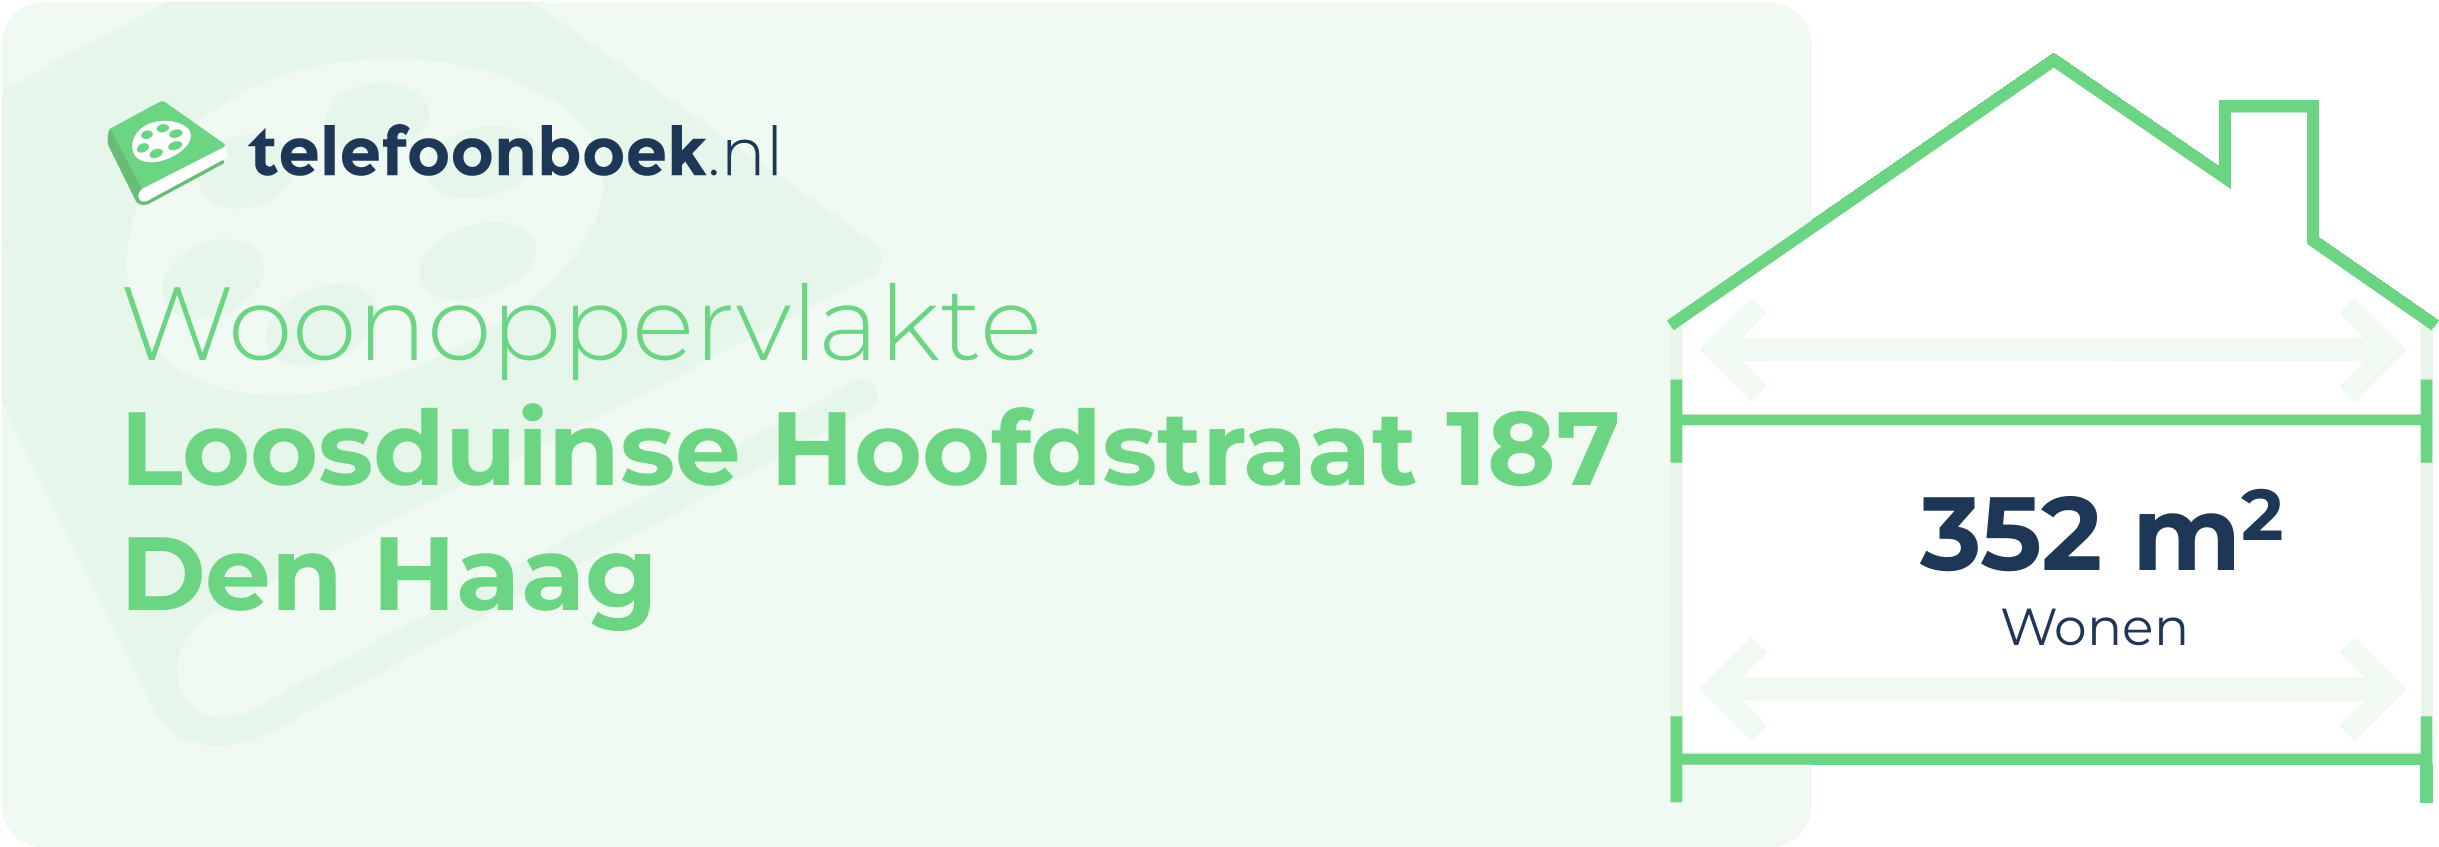 Woonoppervlakte Loosduinse Hoofdstraat 187 Den Haag